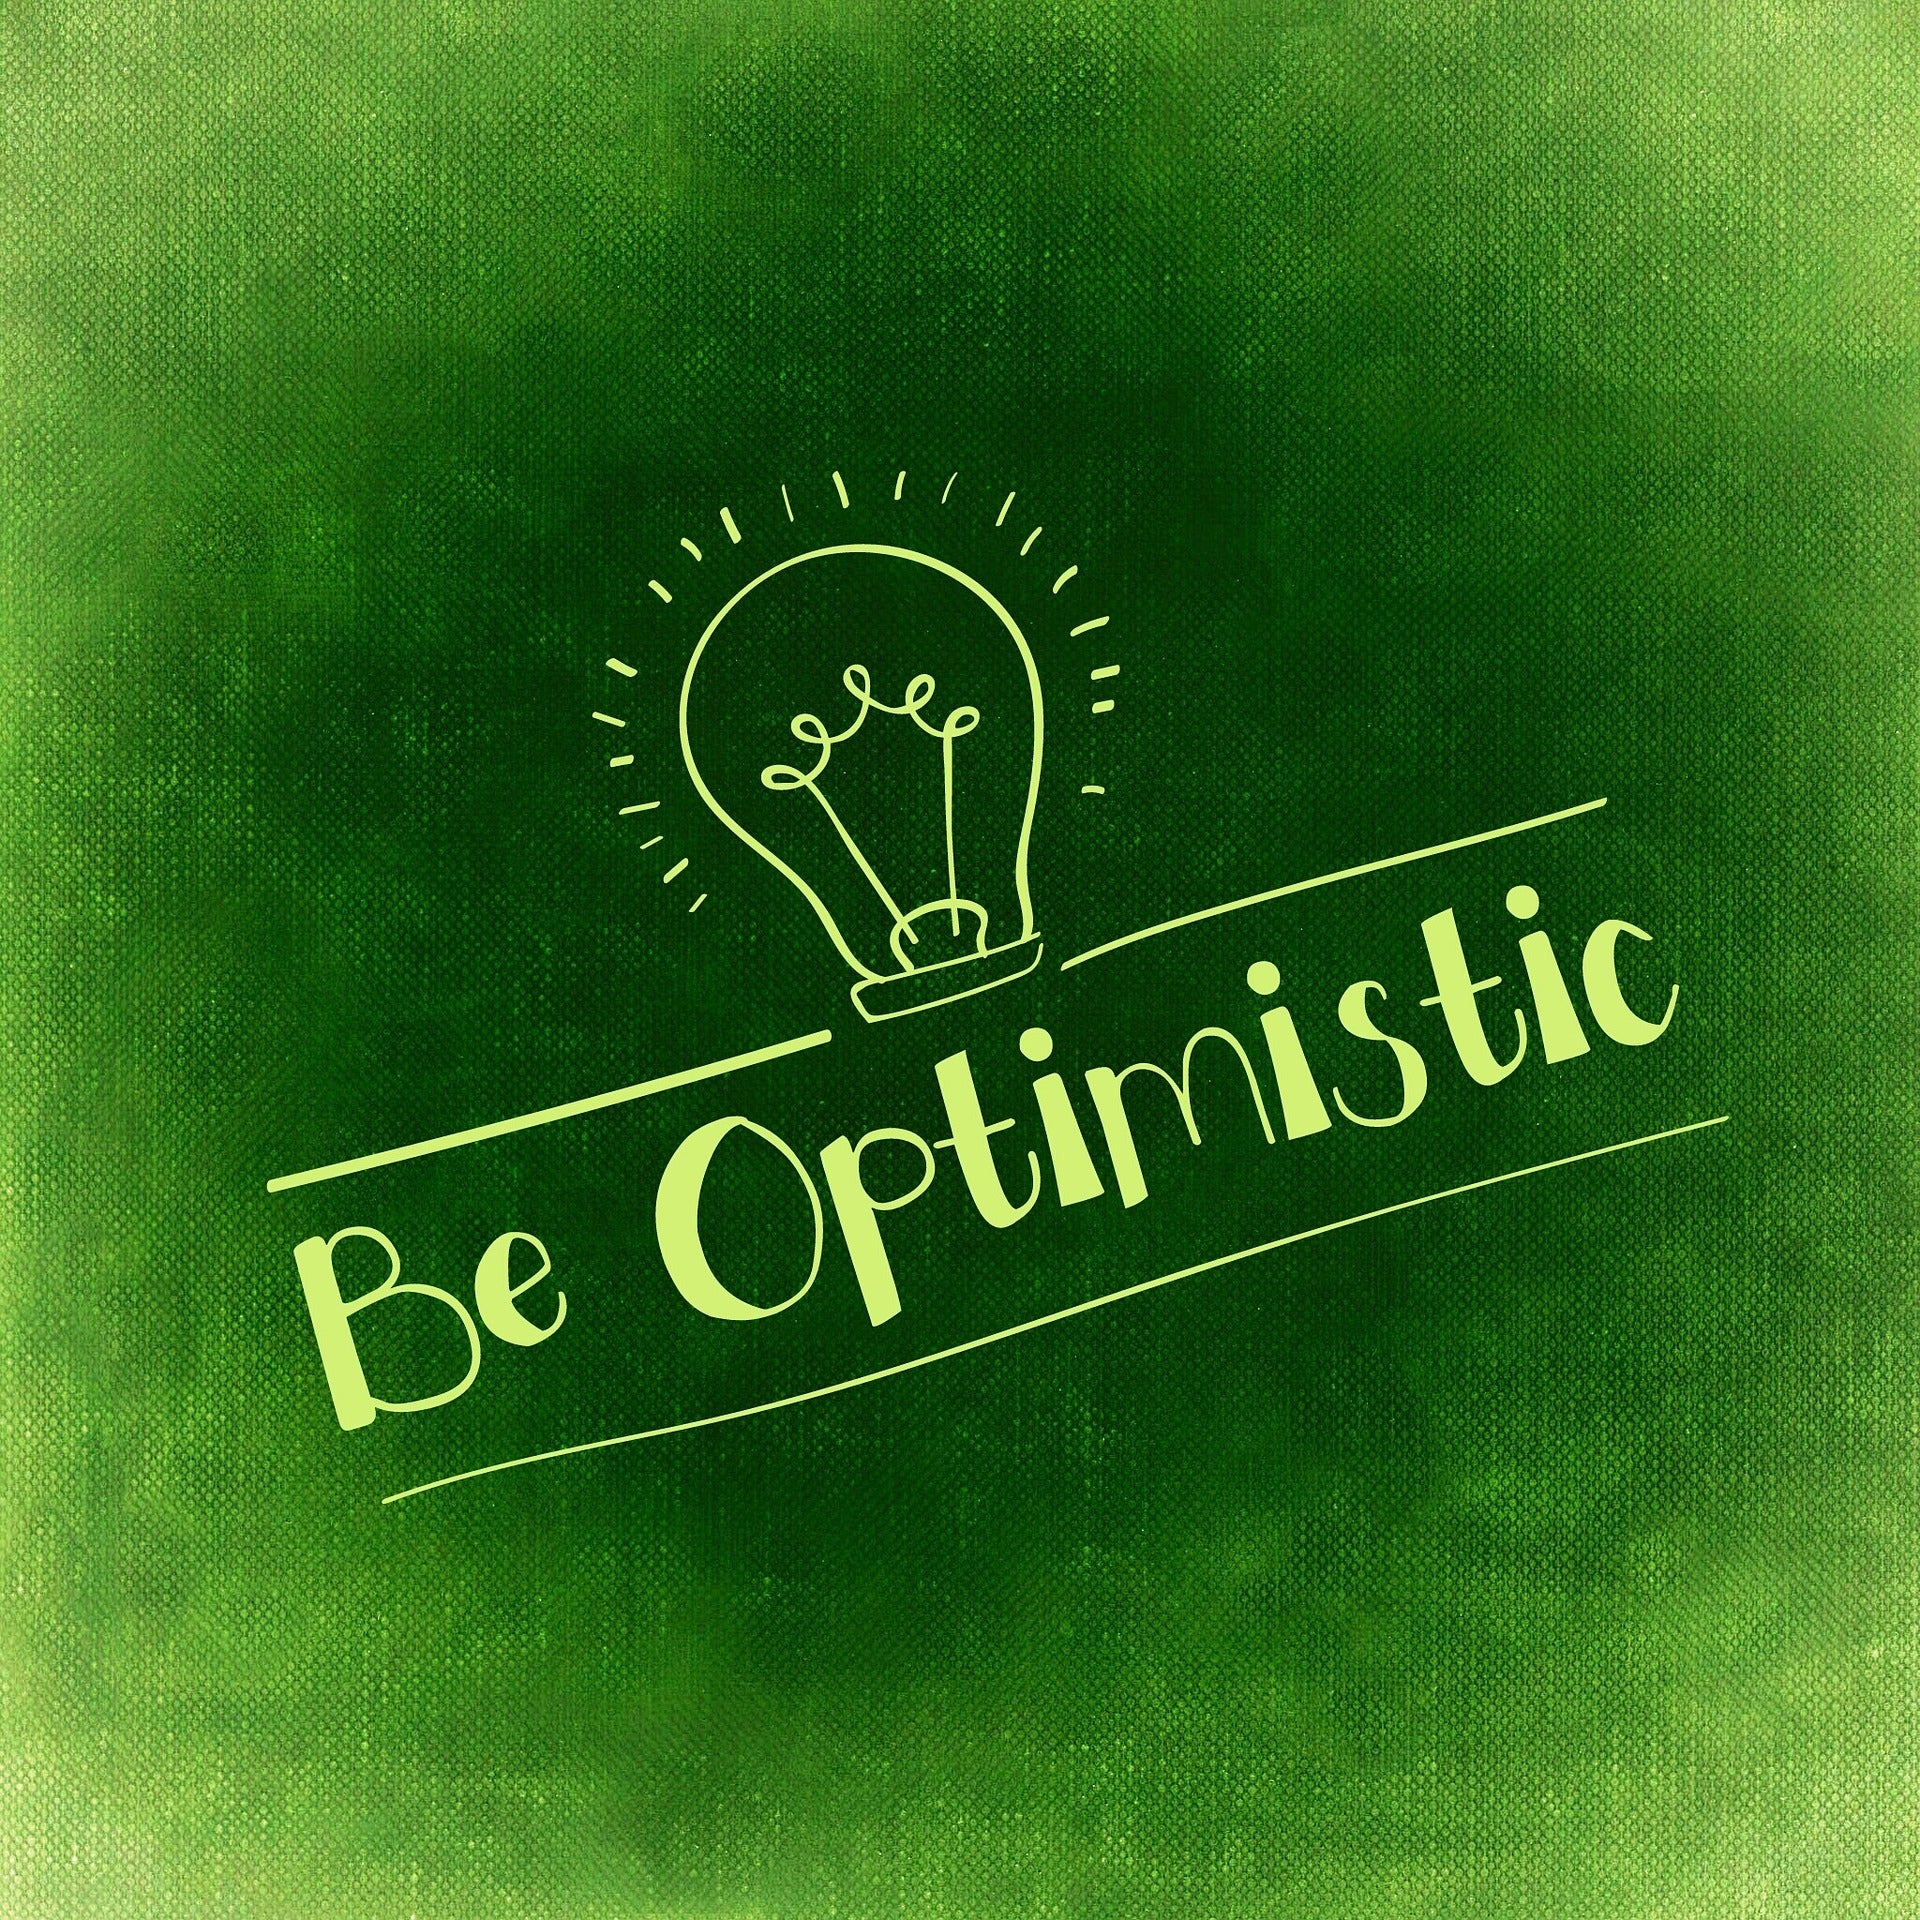 5 Ways Optimism Can Improve Your Life